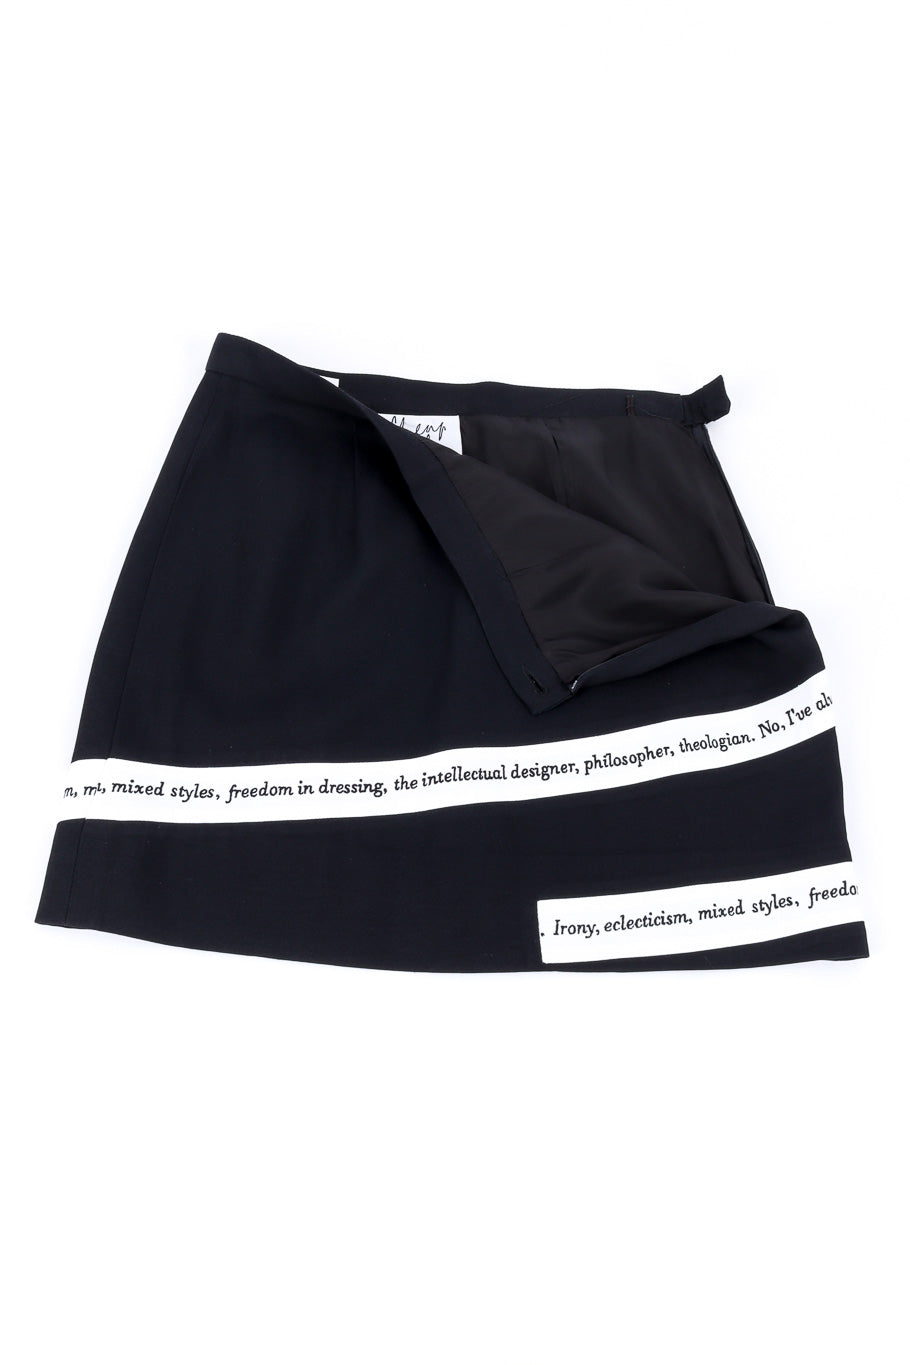 Irony of Design Text Blazer & Skirt Suit by Moschino skirt unzipped  @recessla